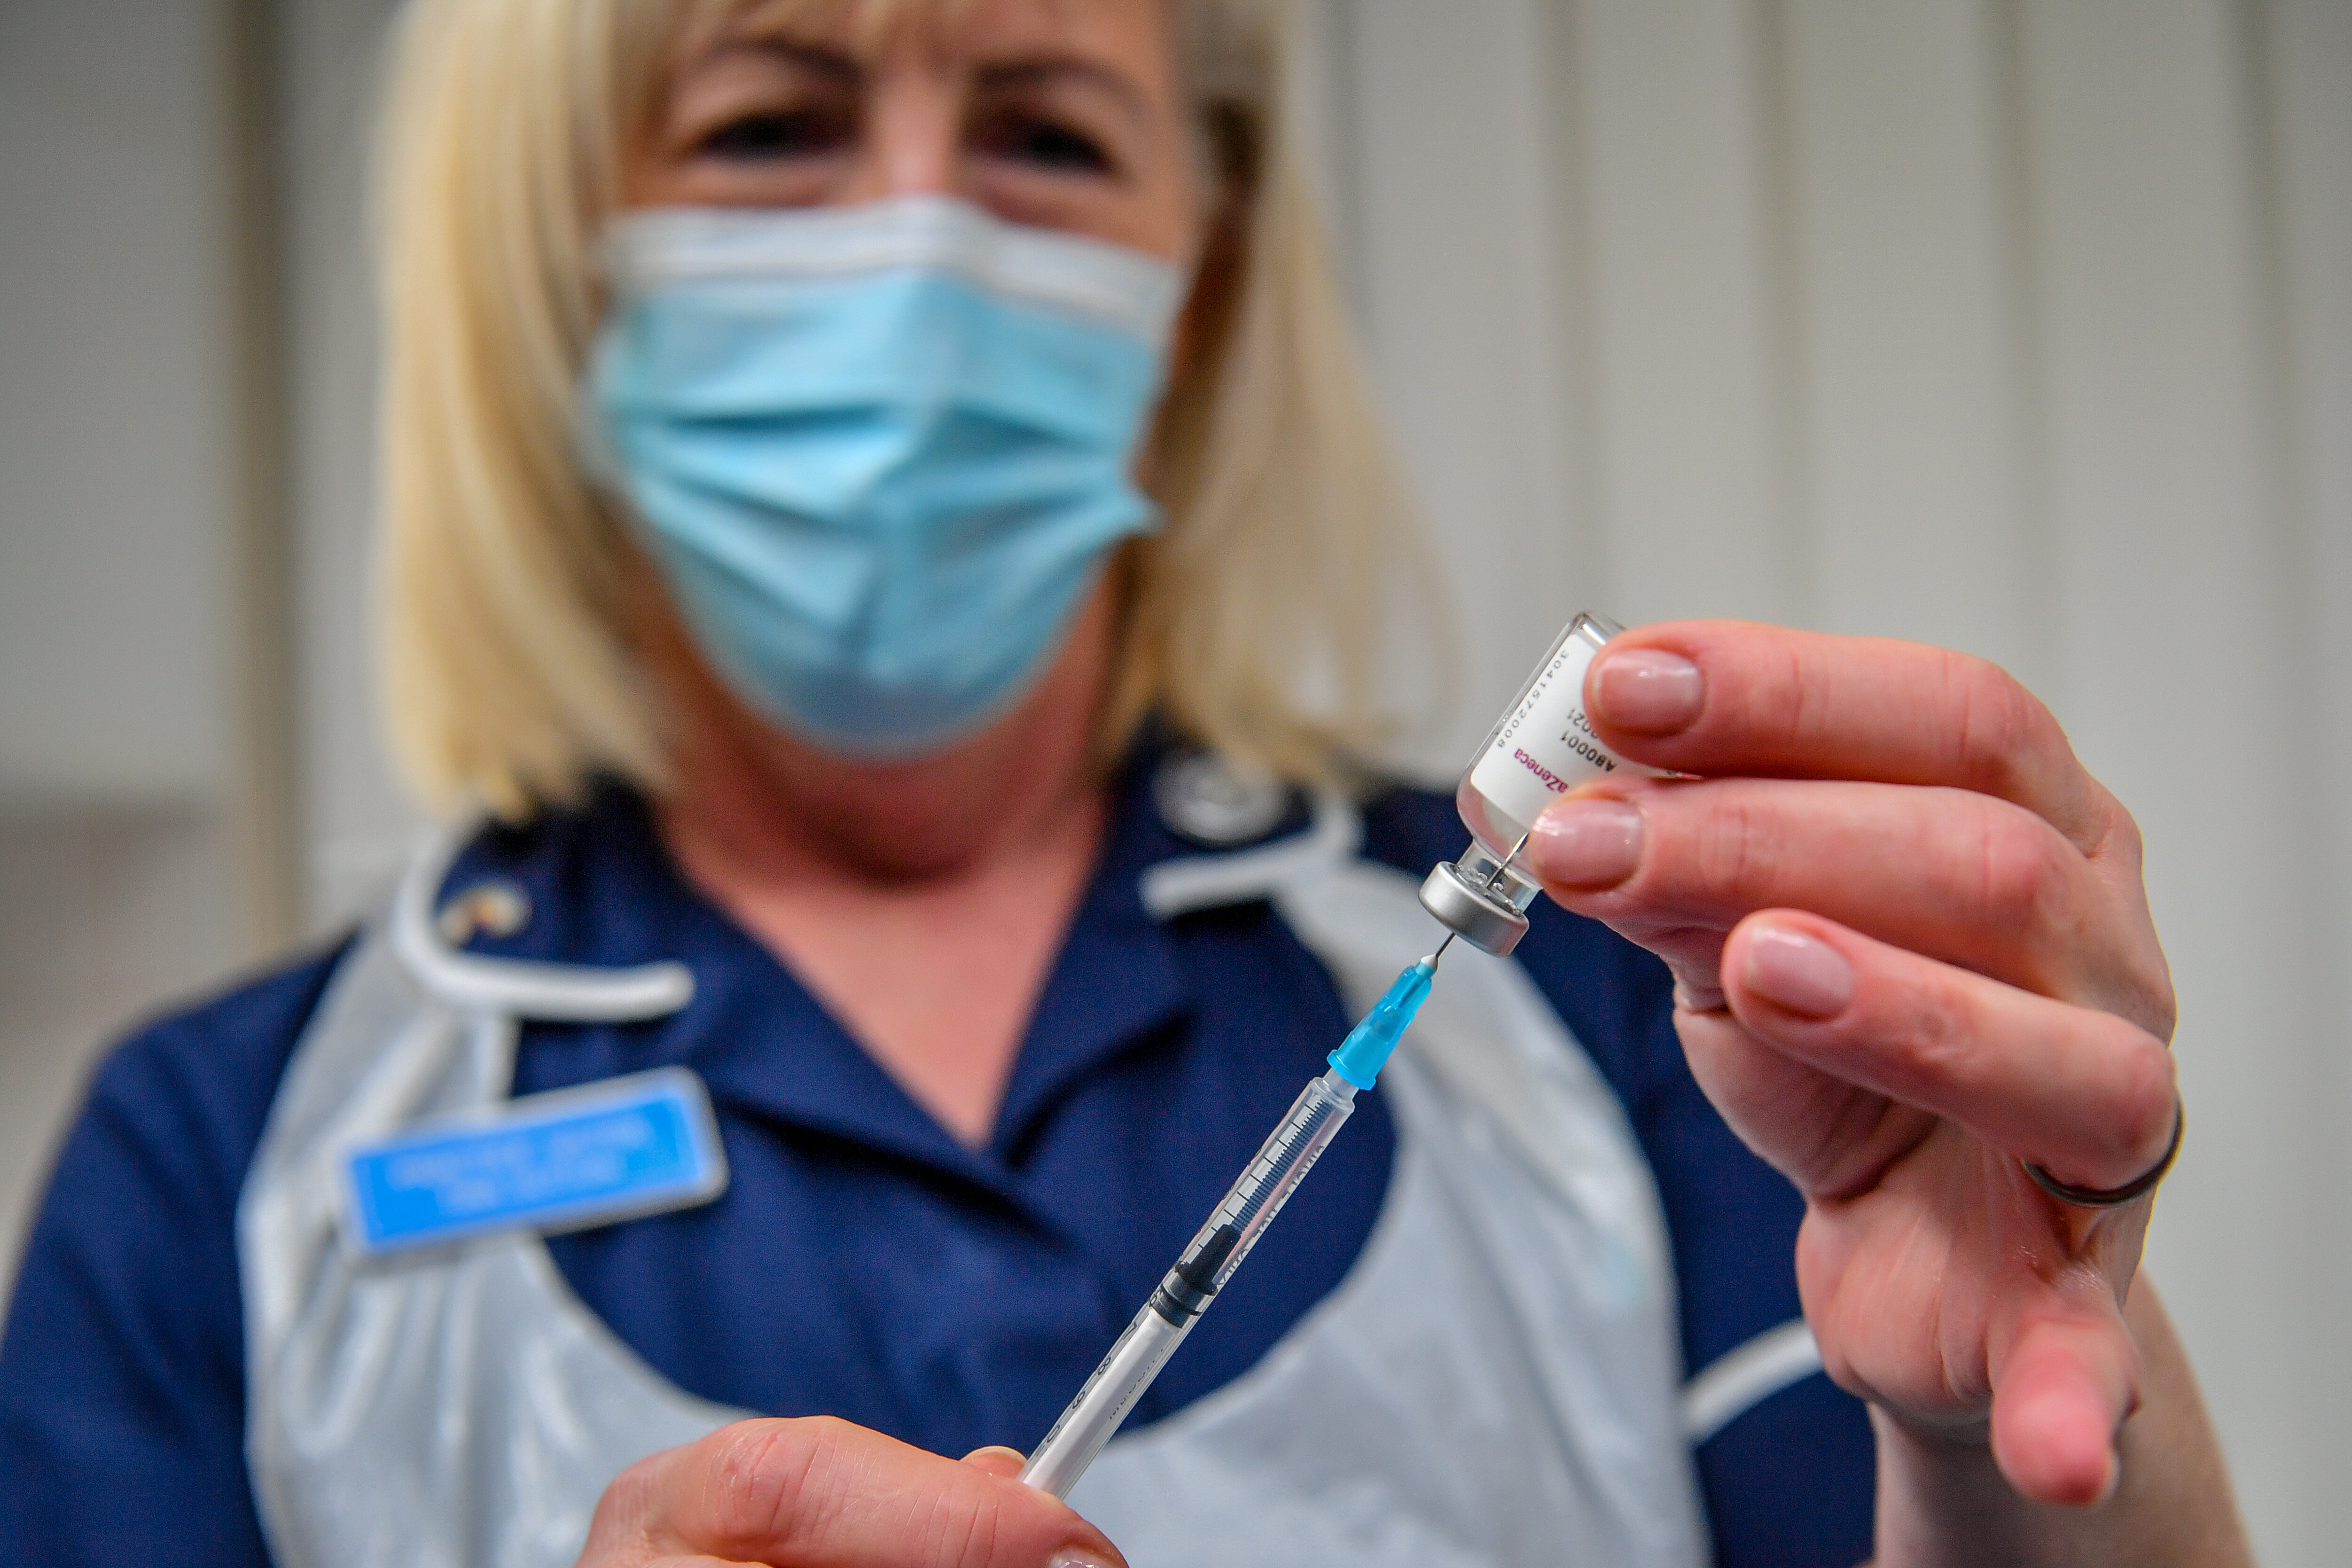 facebook warns to decelerate mandates vaccine